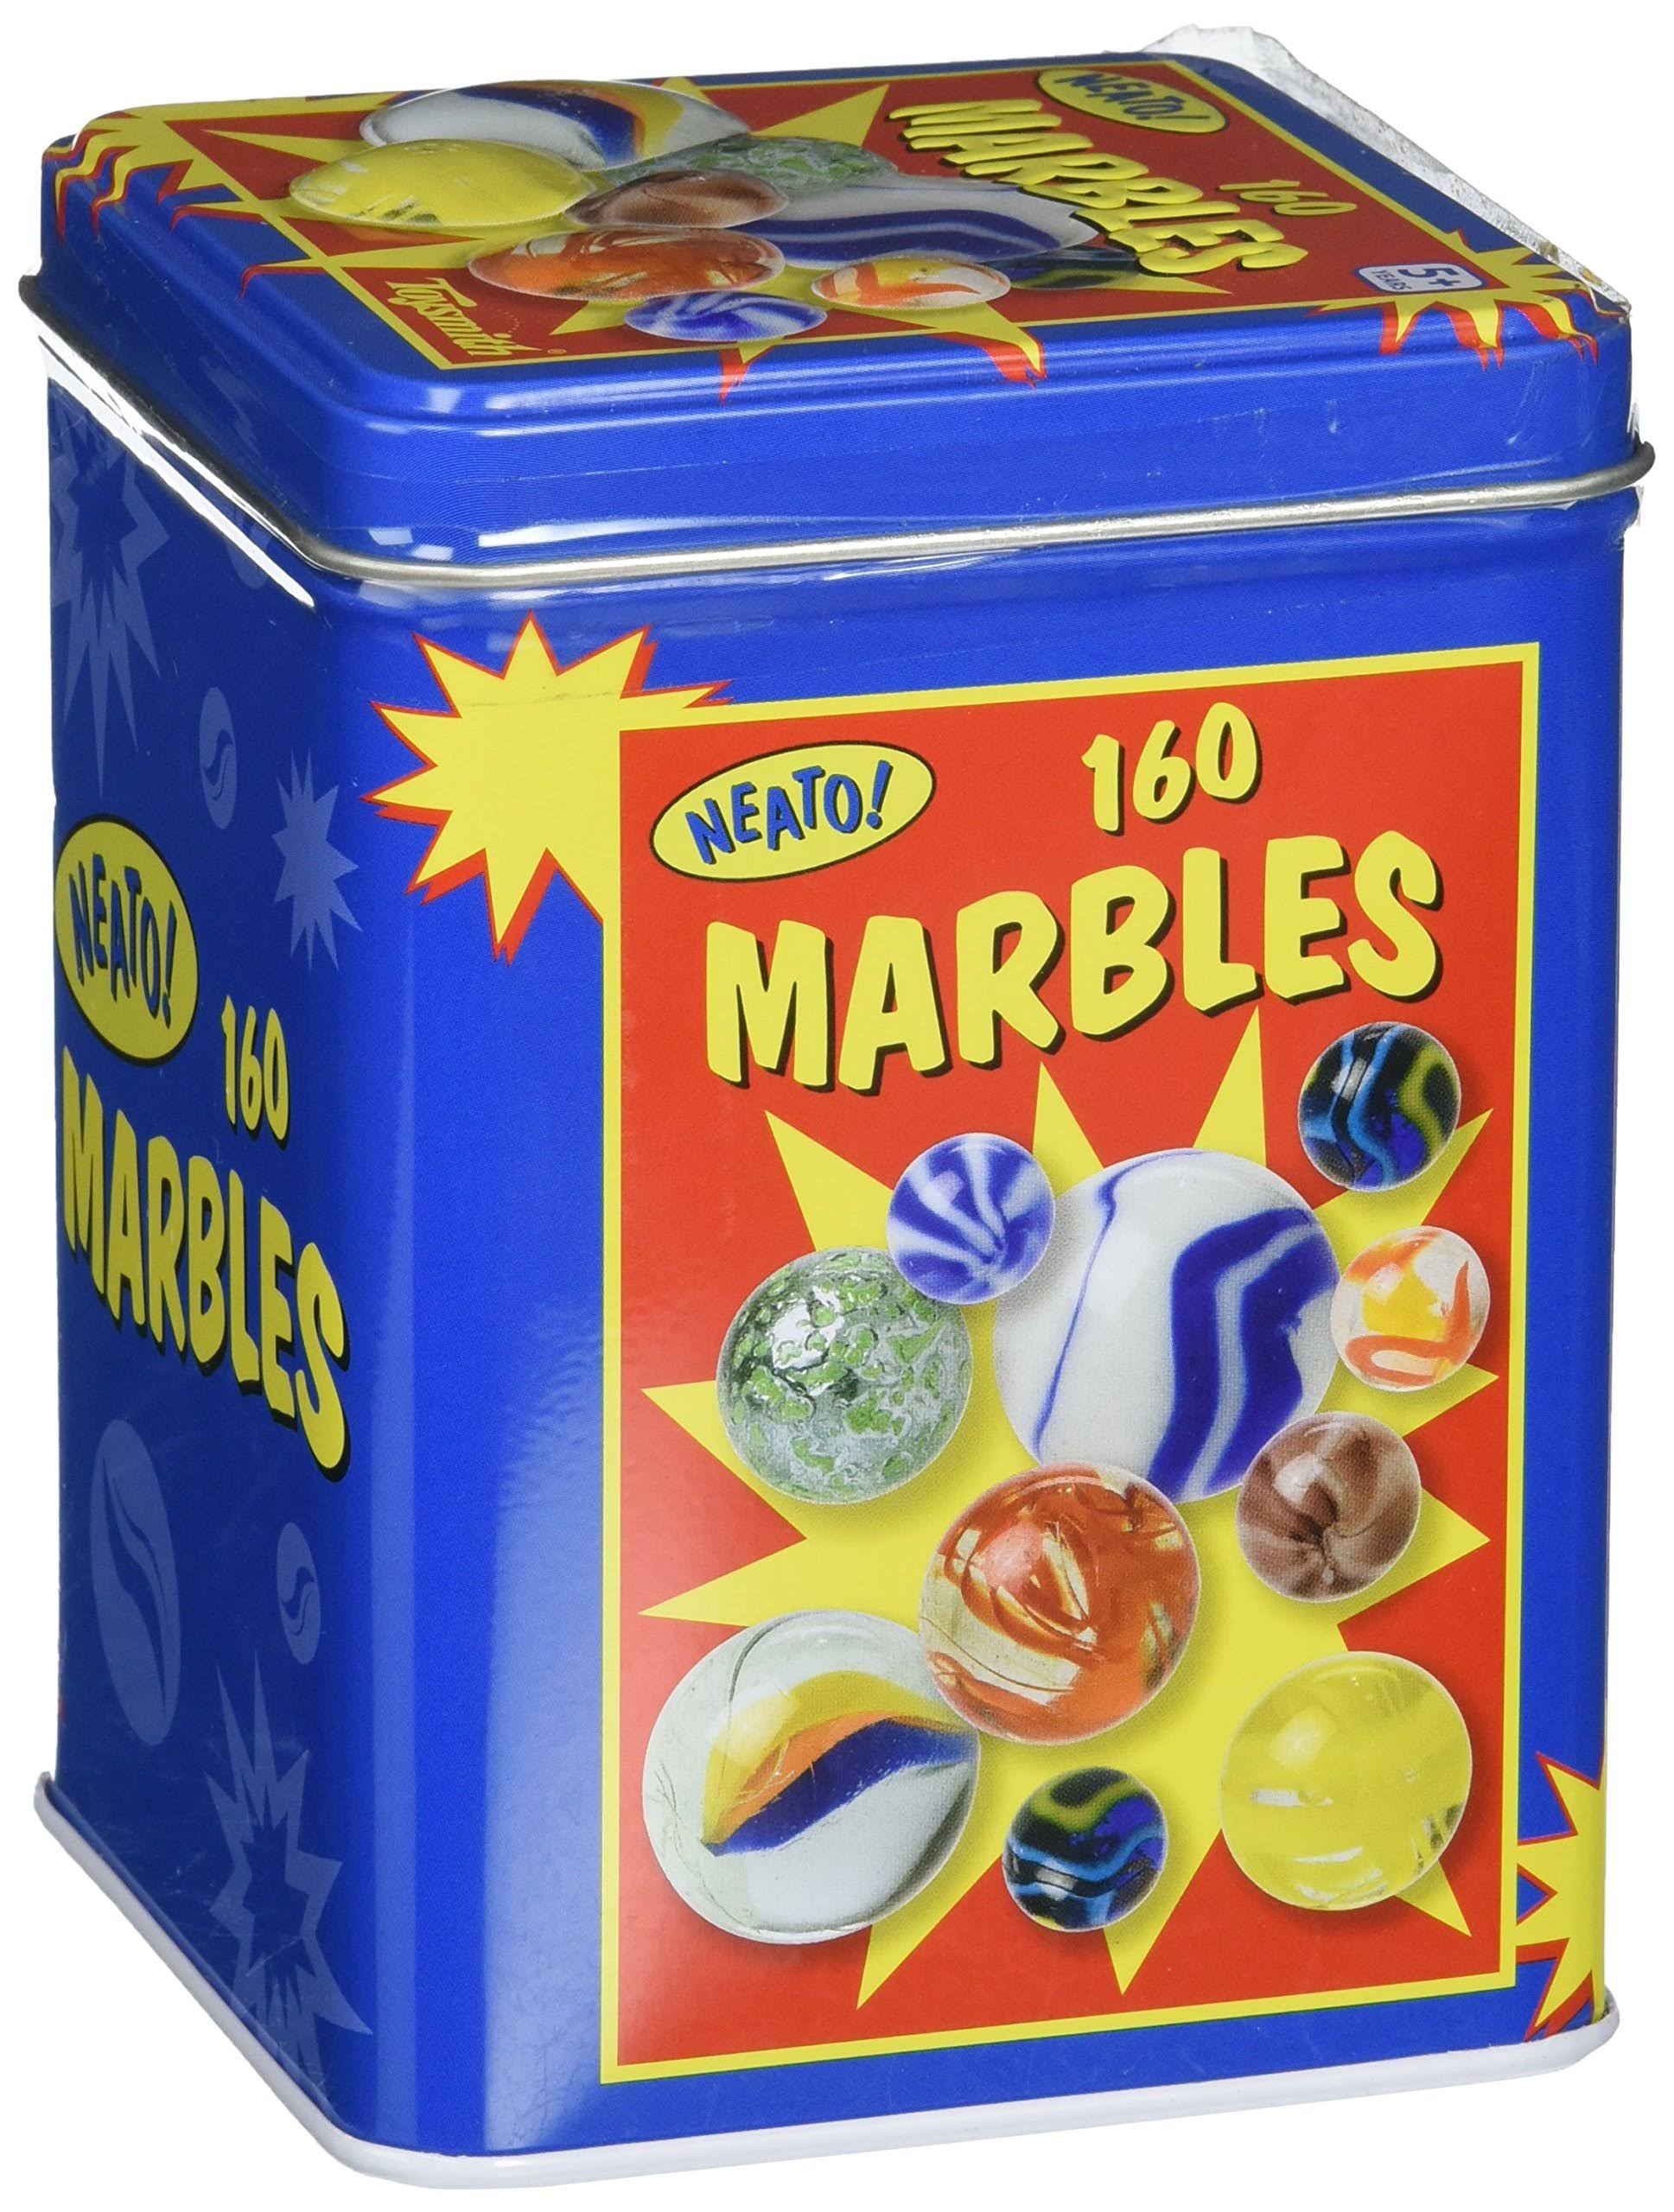 Toysmith Marbles in a Tin Box - 160ct, Multi-colored